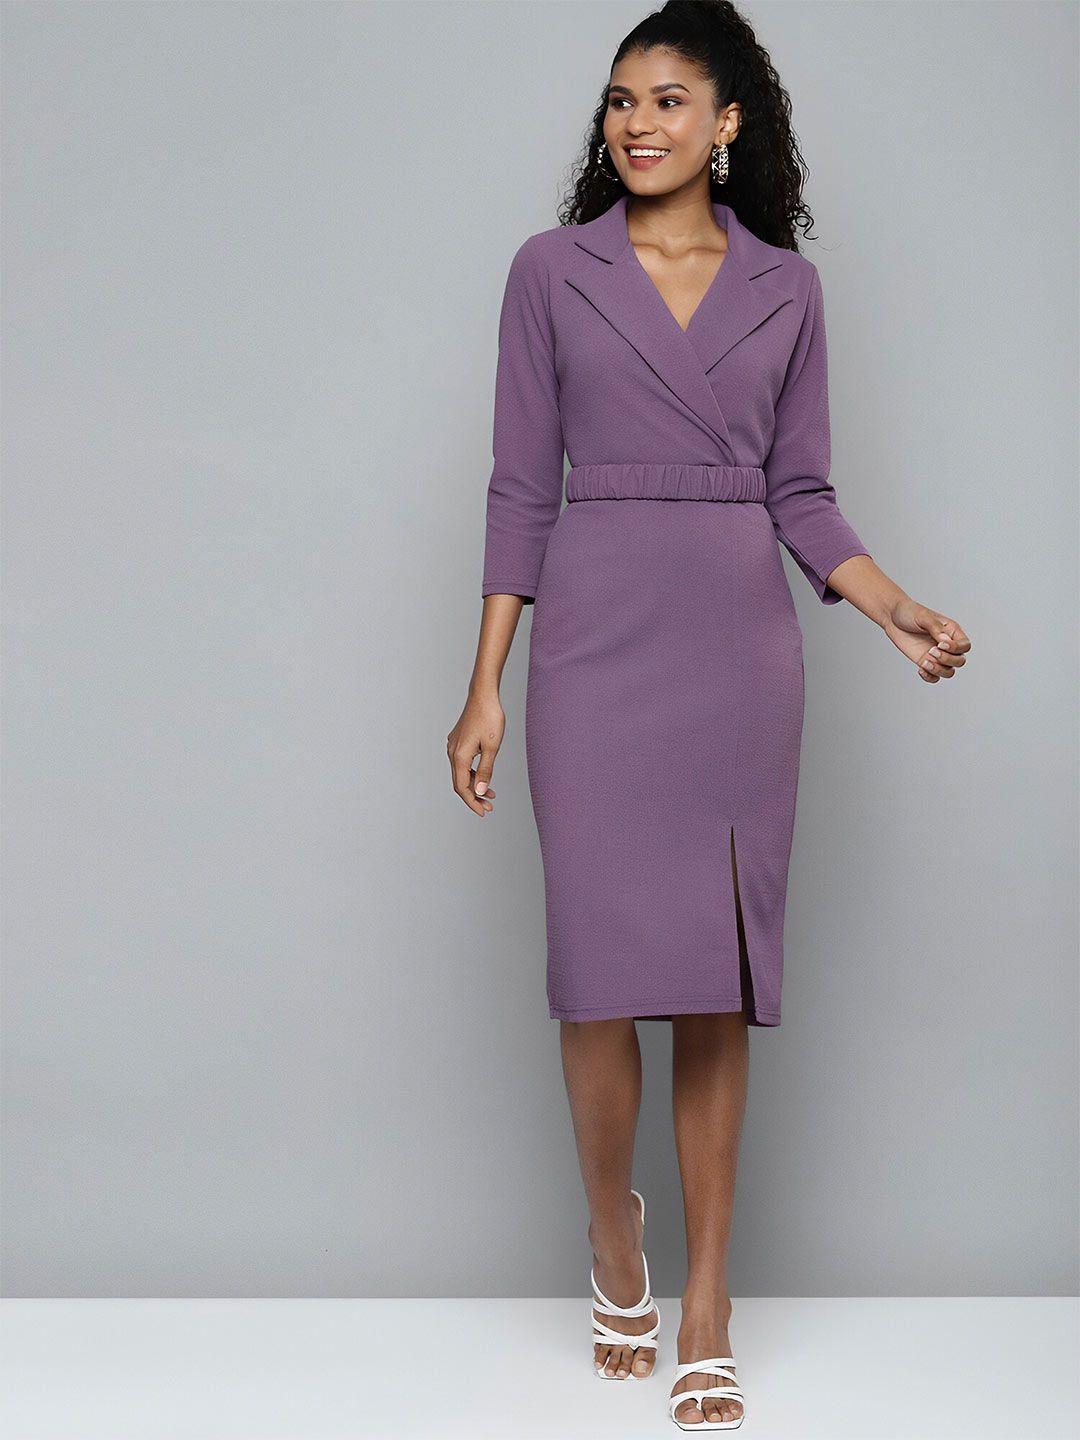 margi designers lavender dress